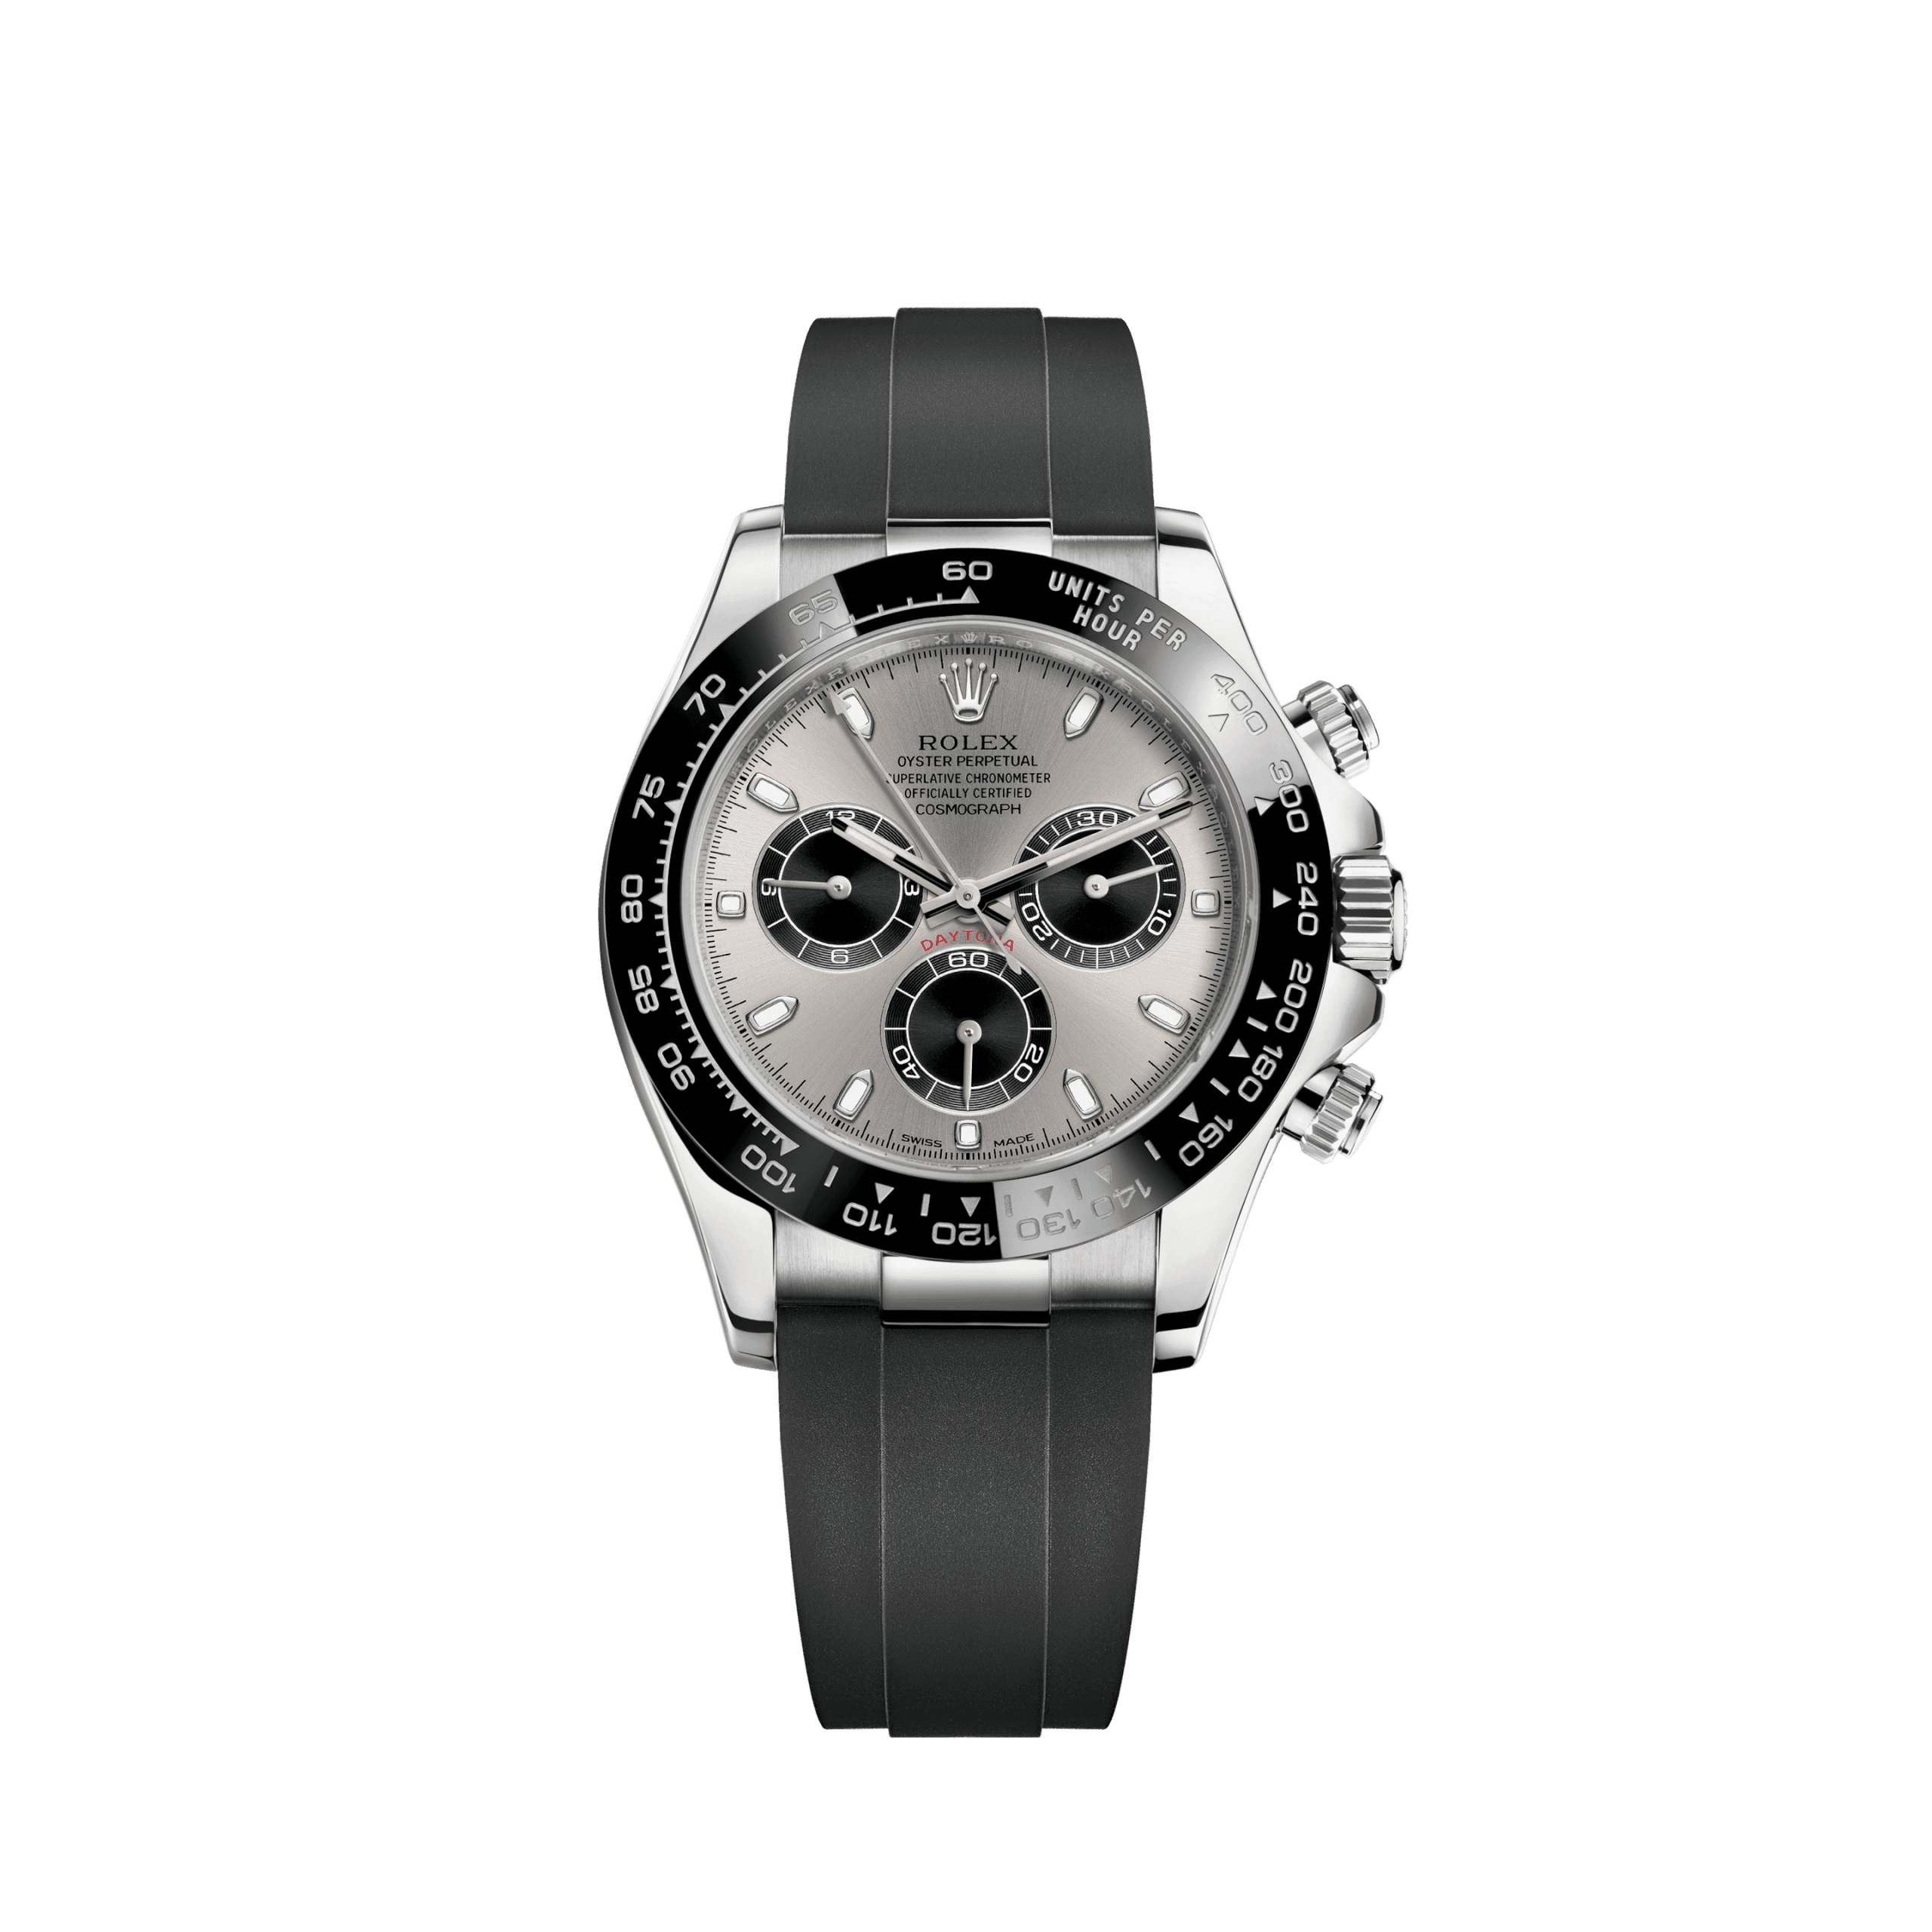 Rolex Cosmograph Daytona (m116519ln-0027)